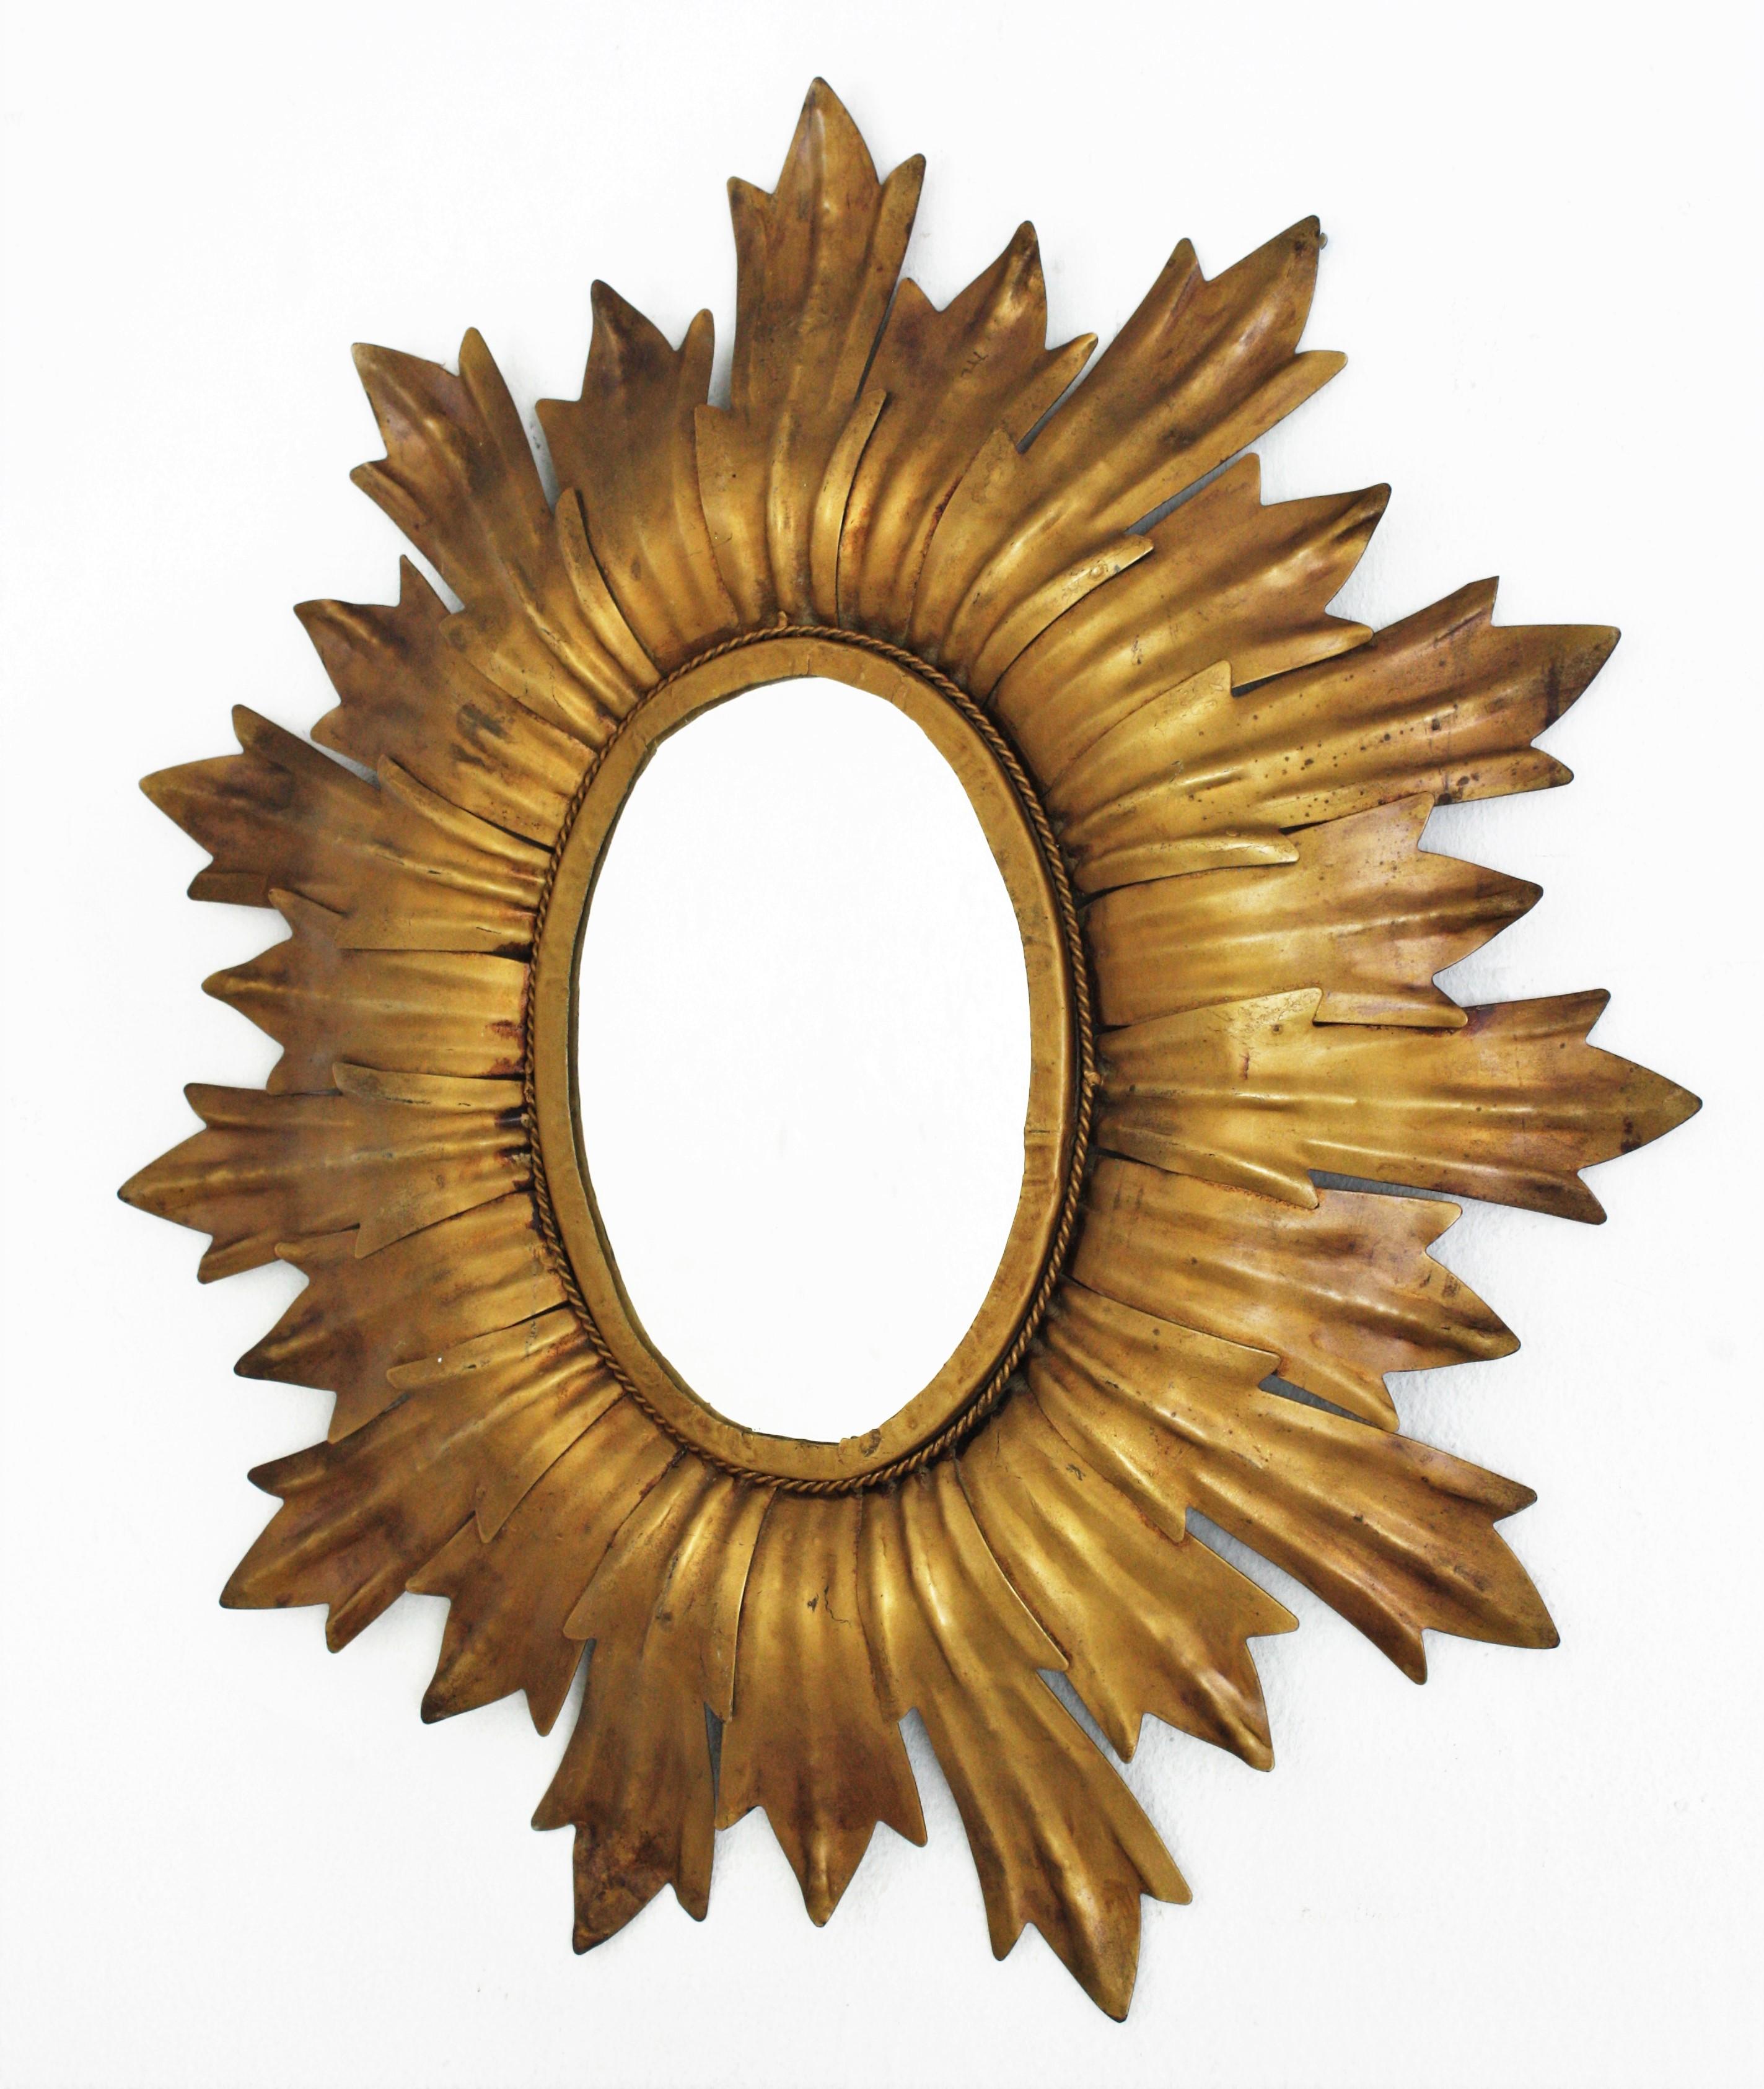 Sunburst Oval Mirror in Gilt Metal with Leafed Frame, France, 1960s For Sale 2